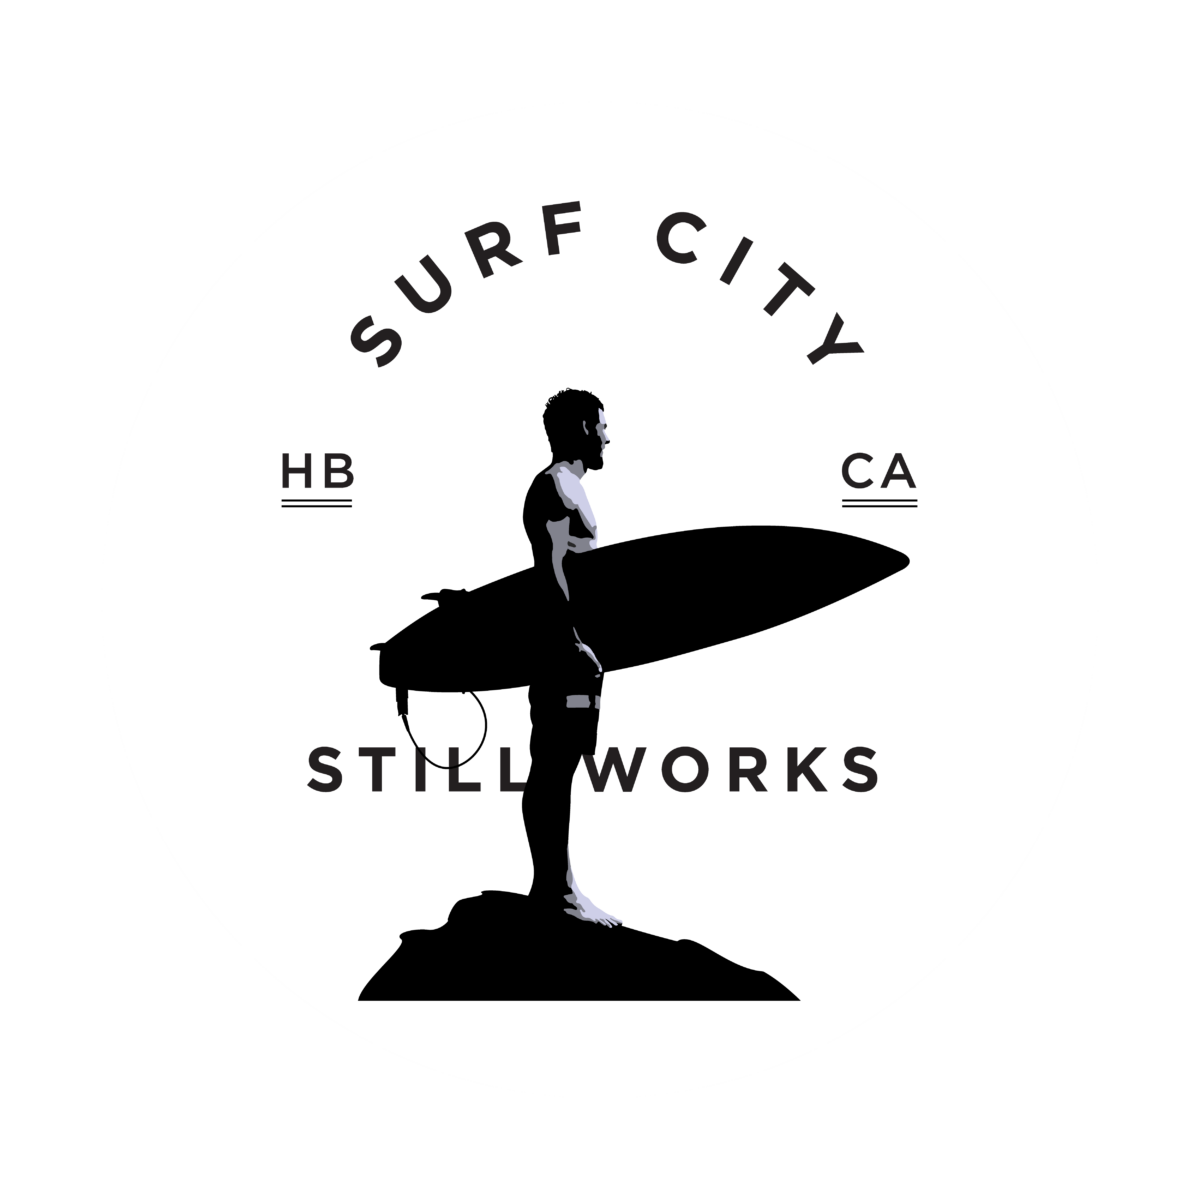 Surf City Stillworks logo